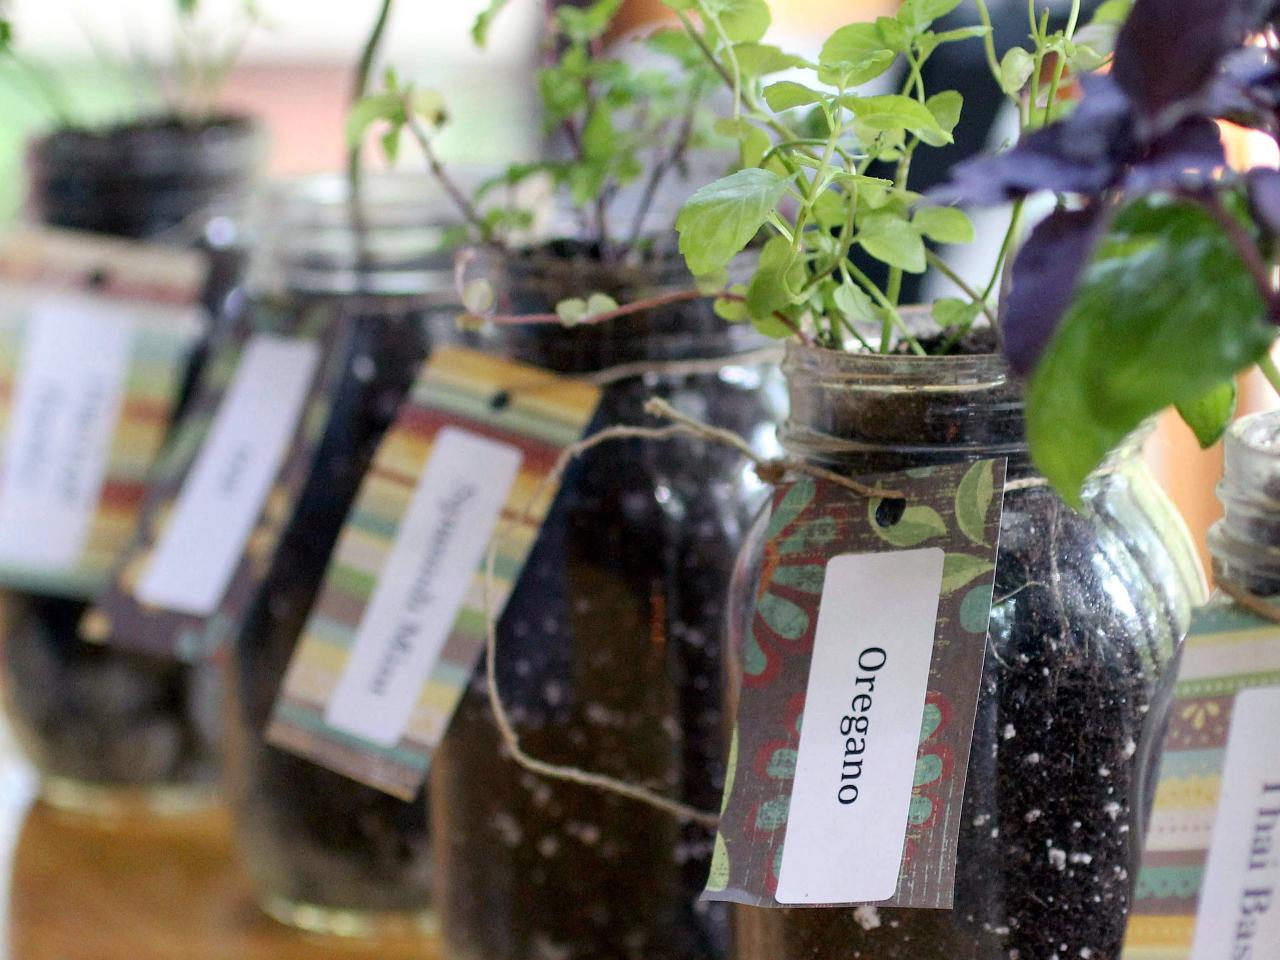 How to Grow Herbs Indoors Using Mason Jars